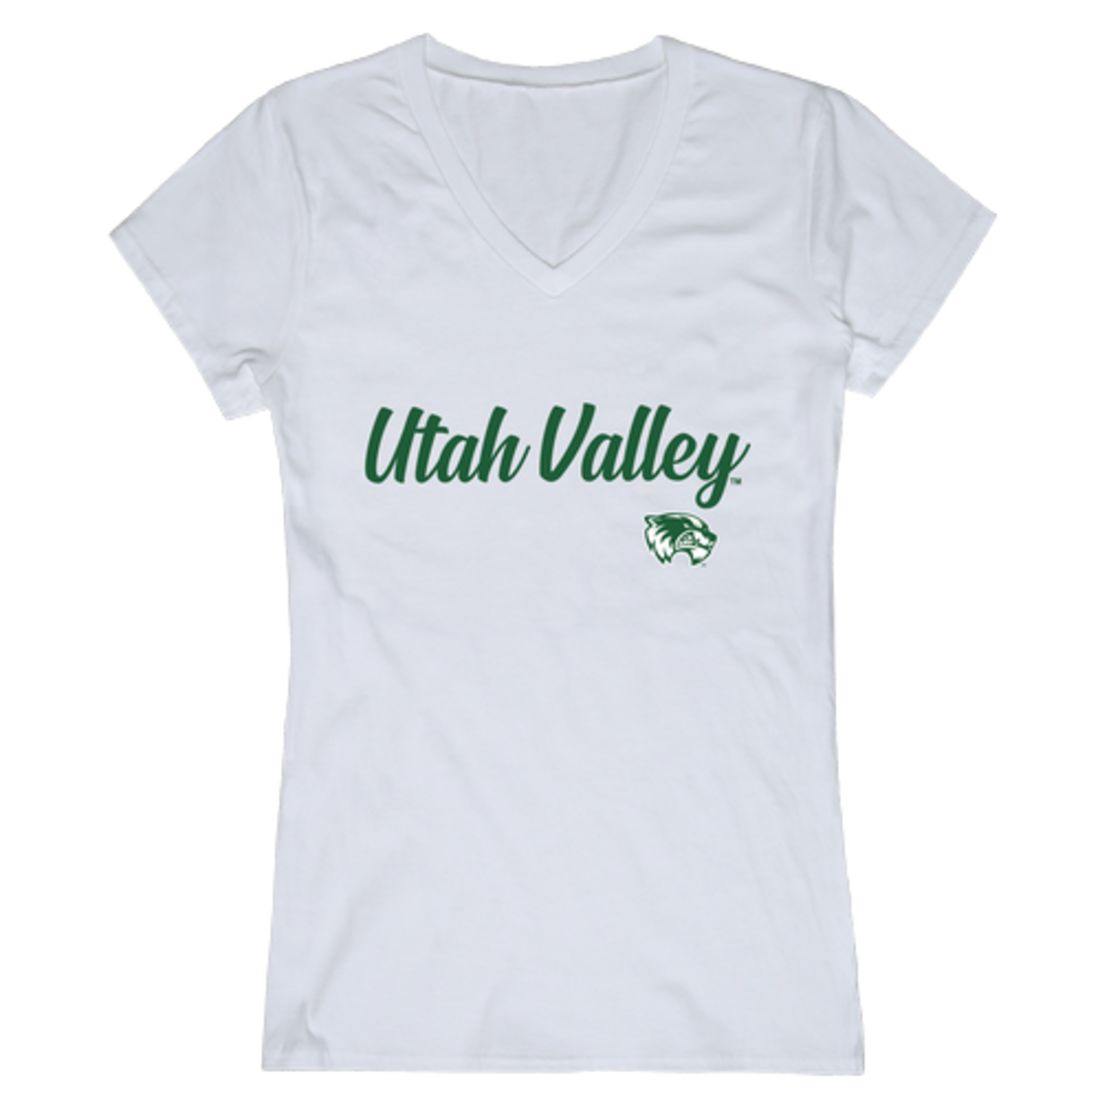 UVU Utah Valley University Wolverines Womens Script Tee T-Shirt-Campus-Wardrobe